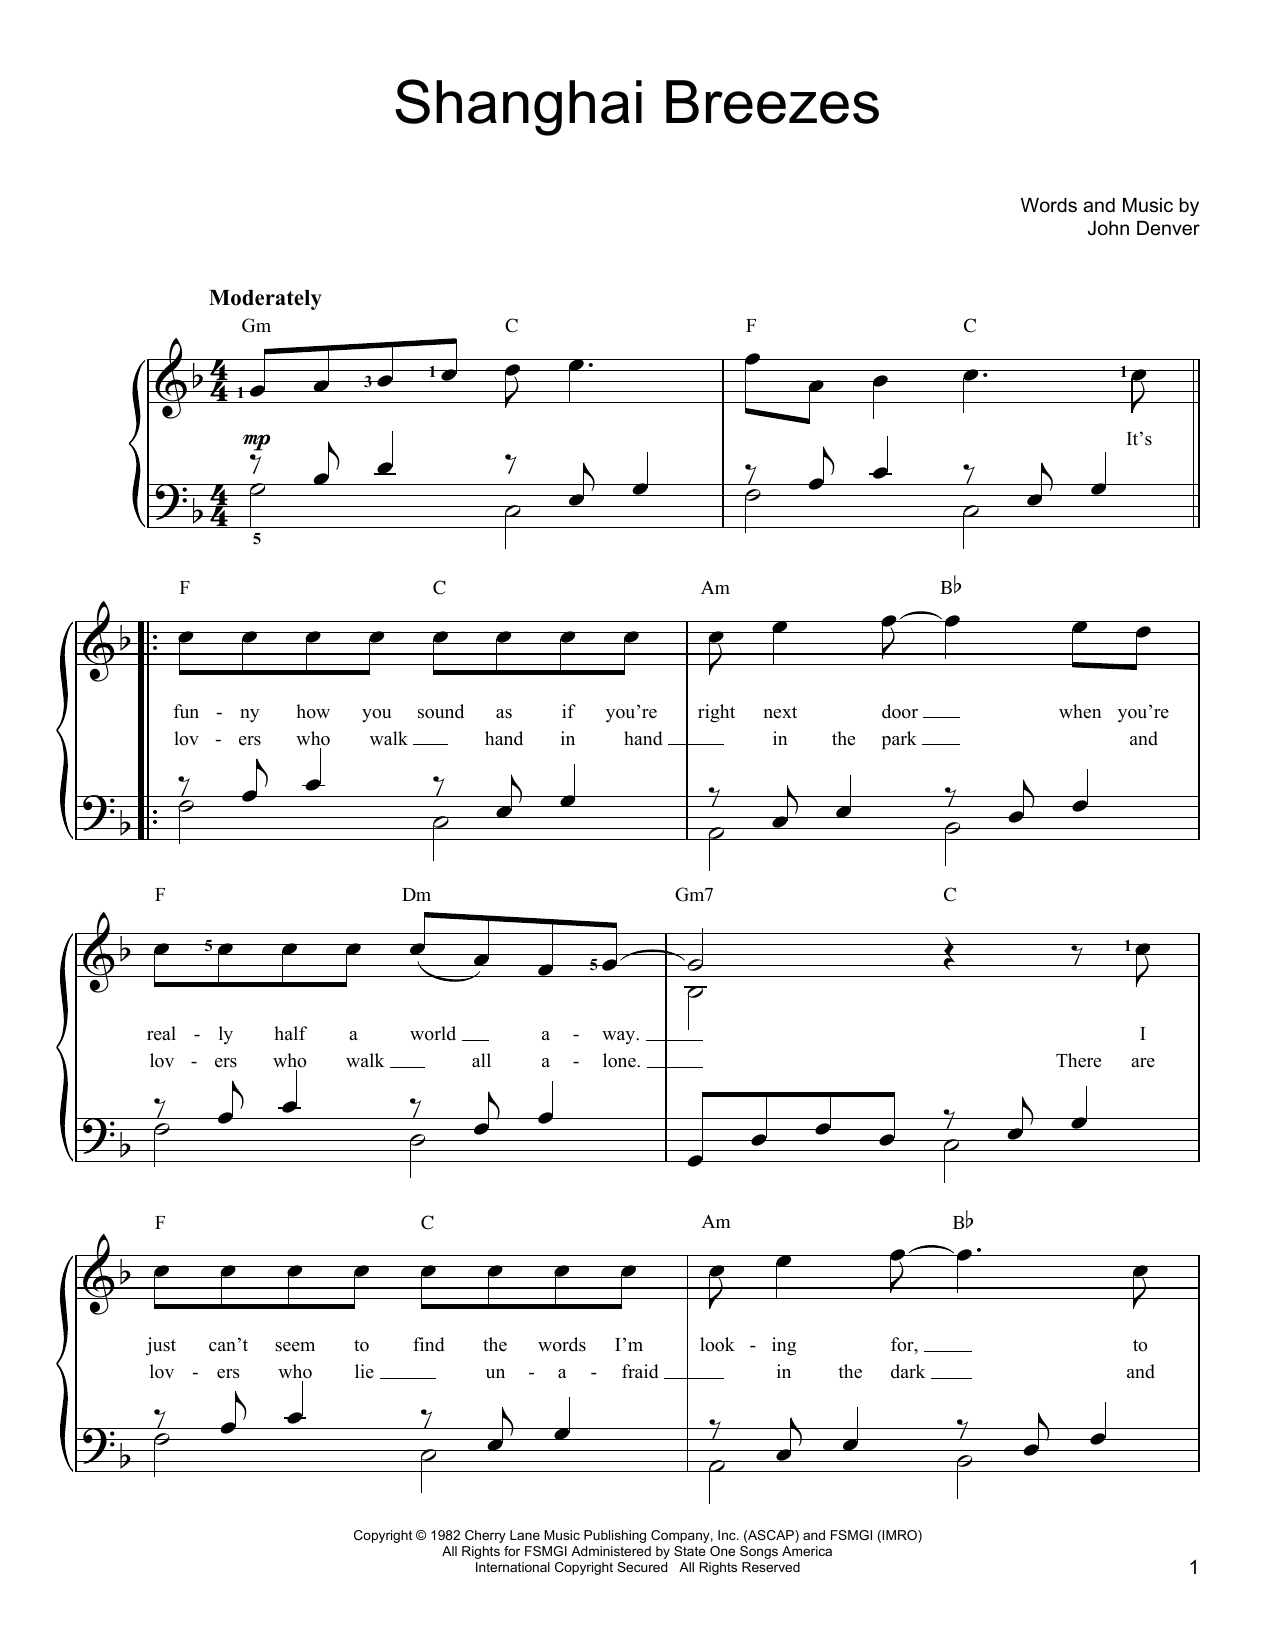 John Denver Shanghai Breezes Sheet Music Notes & Chords for Ukulele with strumming patterns - Download or Print PDF